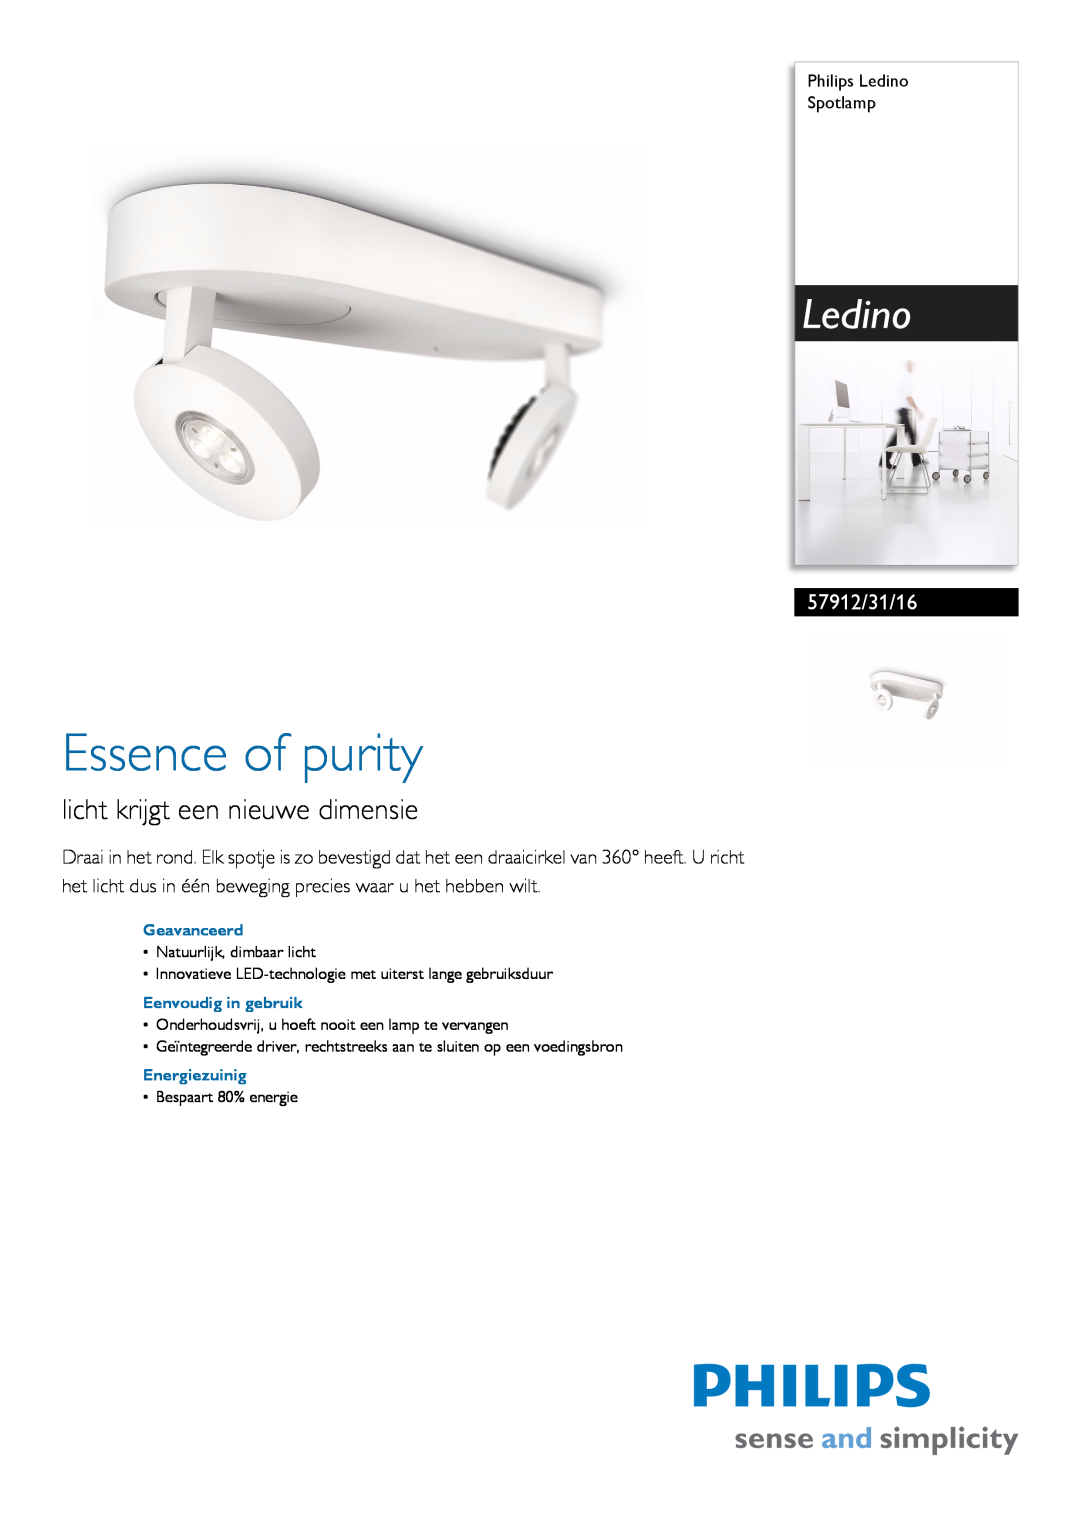 Philips 57912/31/16 manual Philips Ledino Spotlamp, Geavanceerd, Eenvoudig in gebruik, Energiezuinig, Essence of purity 